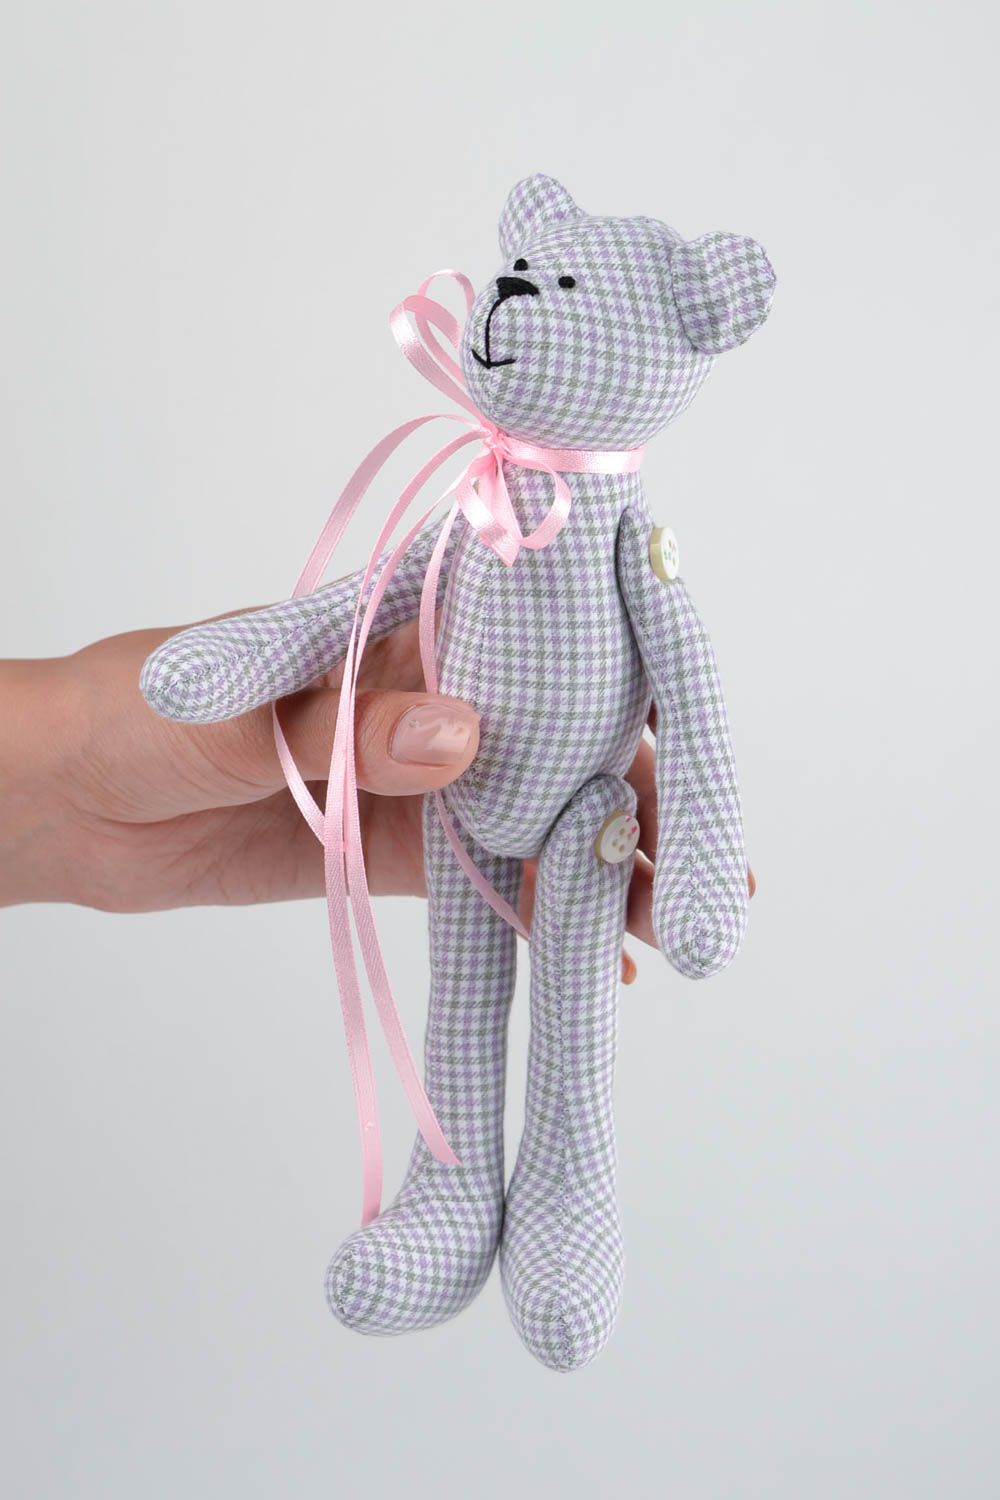 Bear toy soft toy handmade toys nursery decor gifts for children stuffed animals photo 2